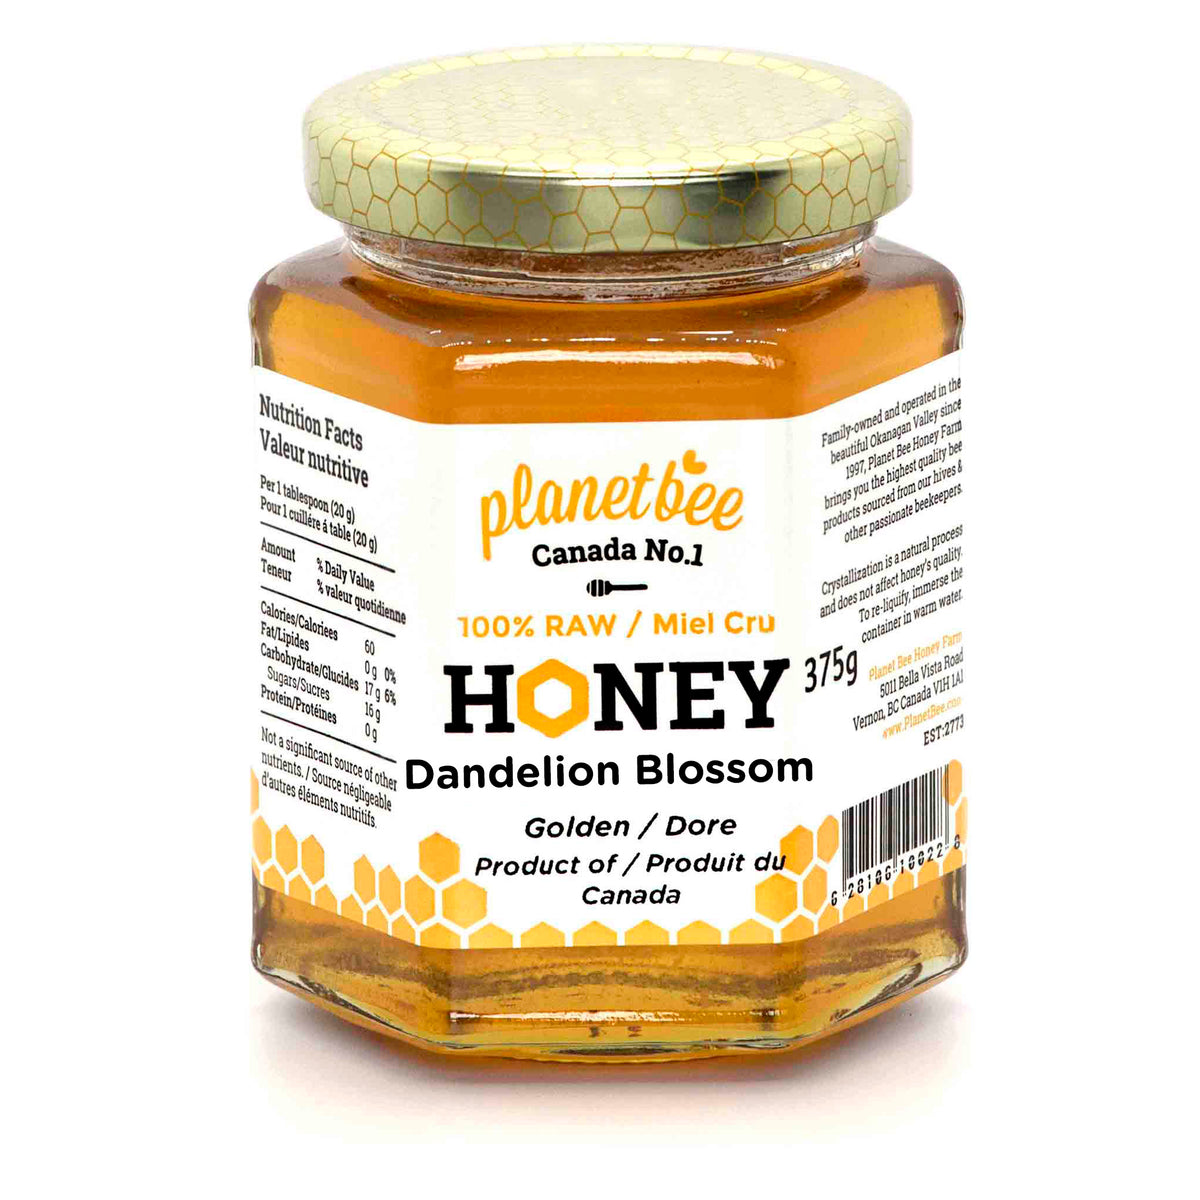 Dandelion blossom Canadian Honey